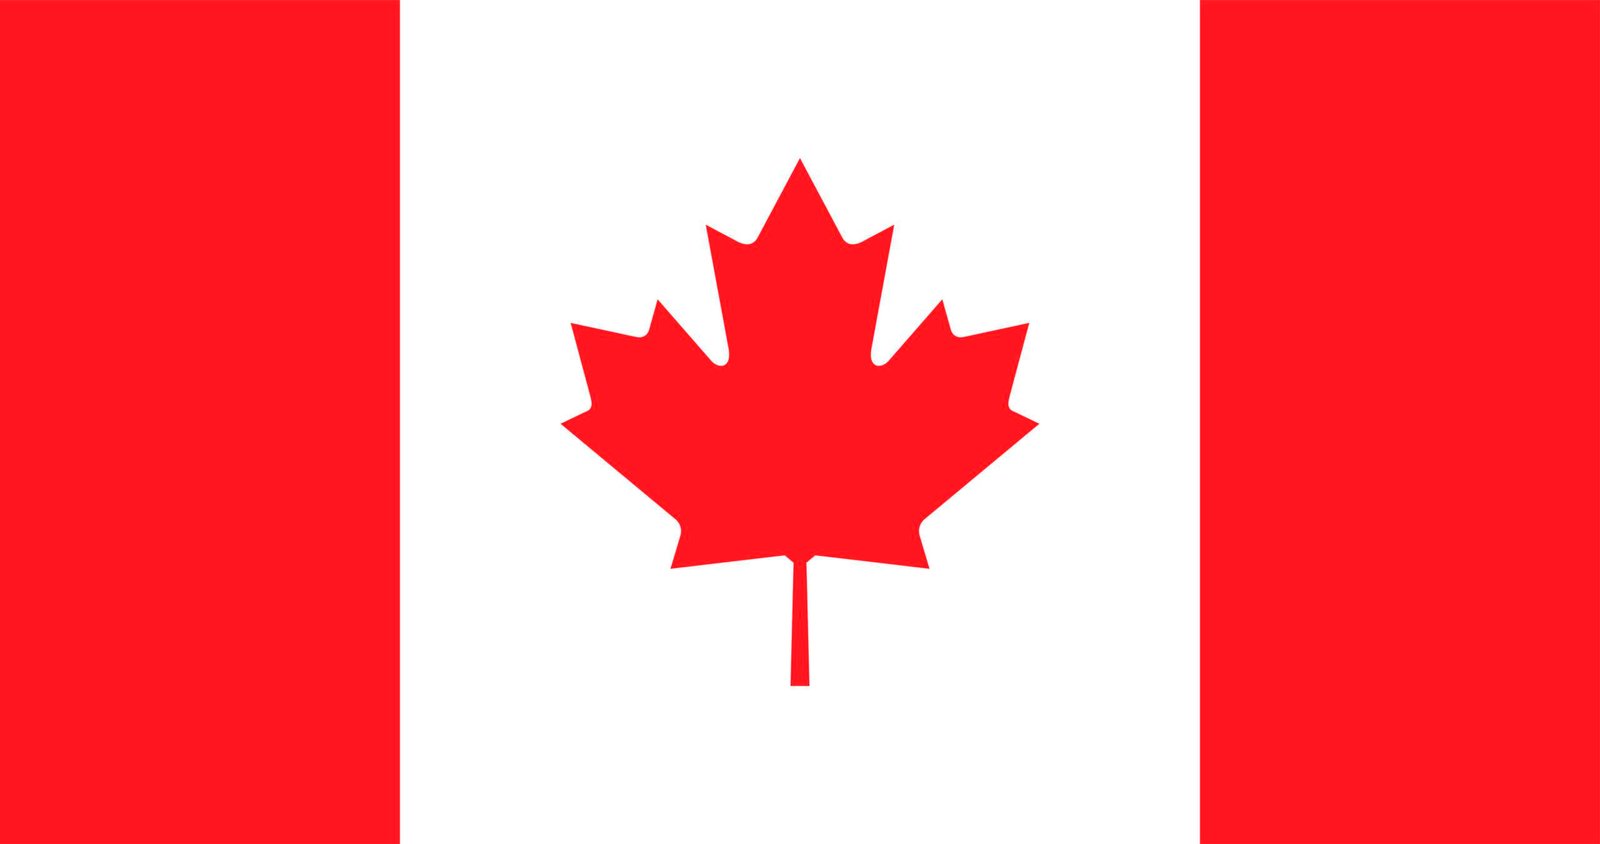 Illustration of Canada flag